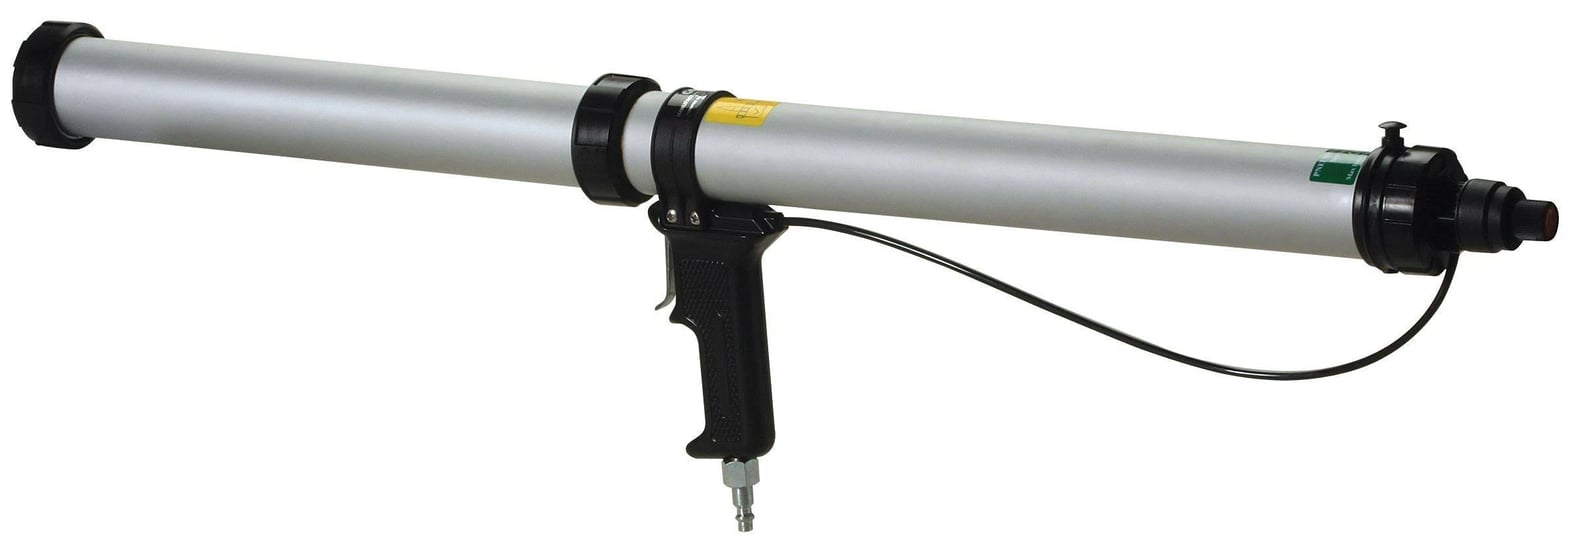 cox-61009-pneumatic-caulk-gunbulk-cartridge-1